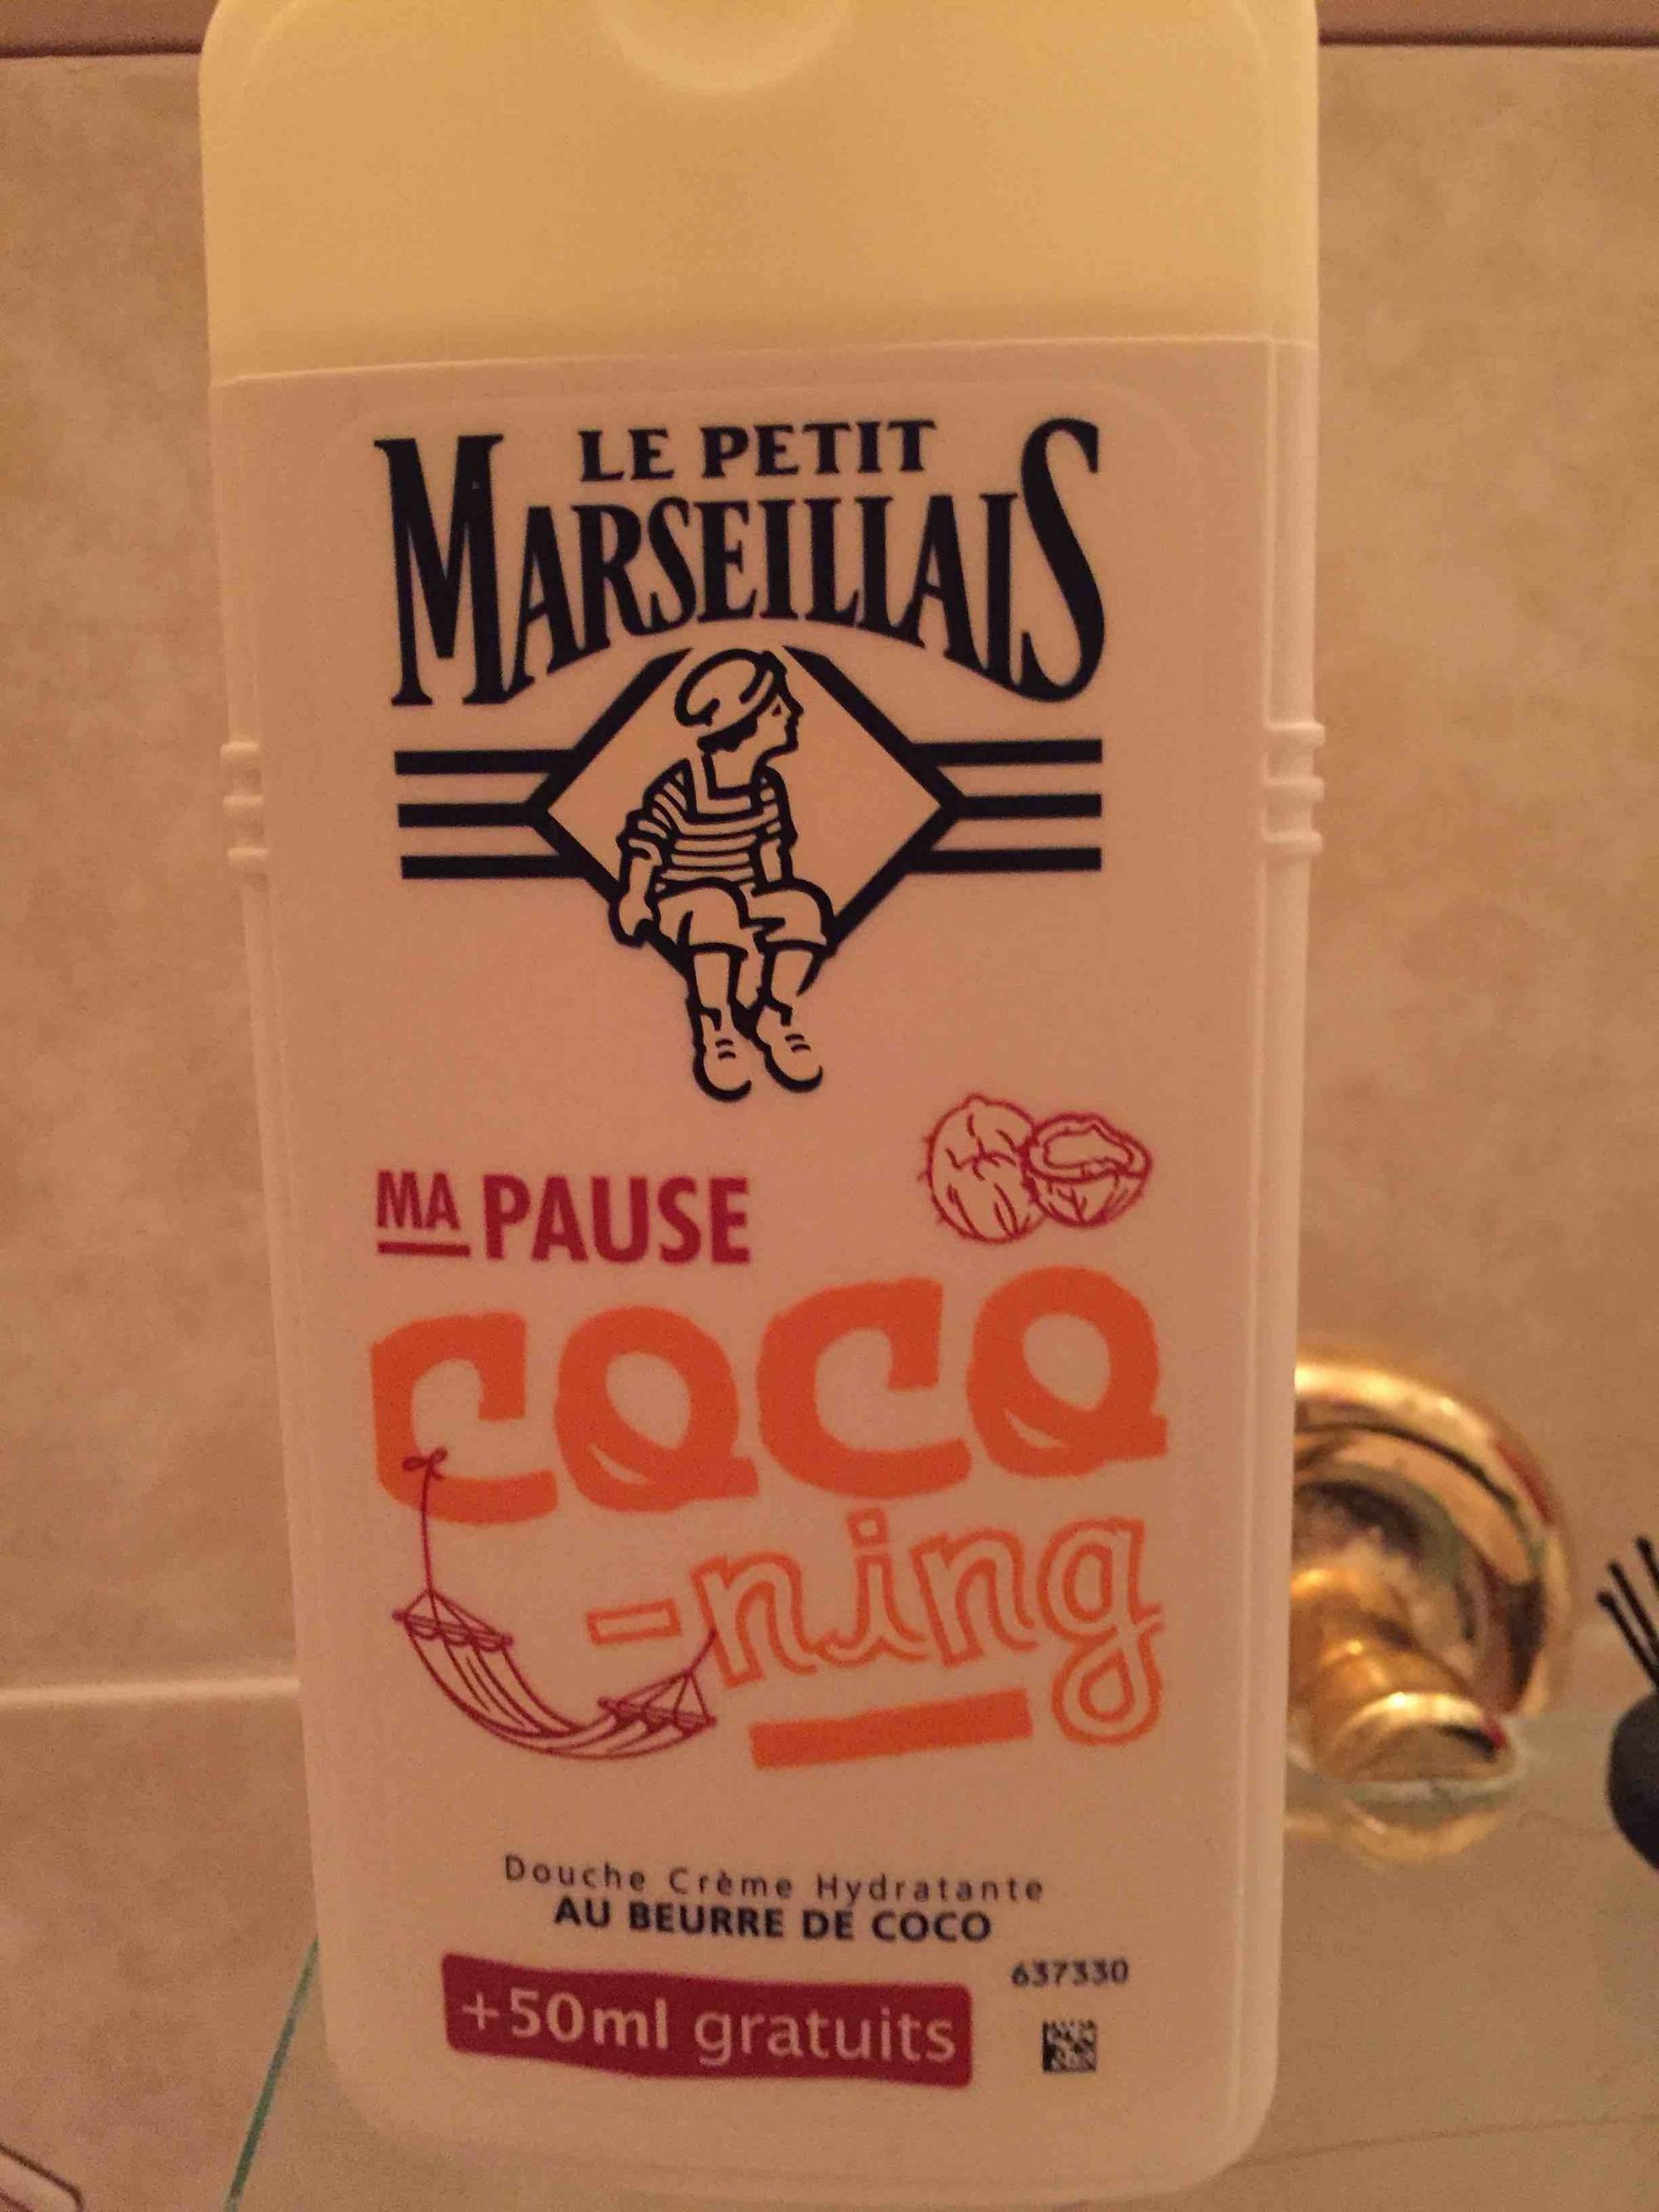 LE PETIT MARSEILLAIS - Ma pause coco-ning - Douche crème hydratante